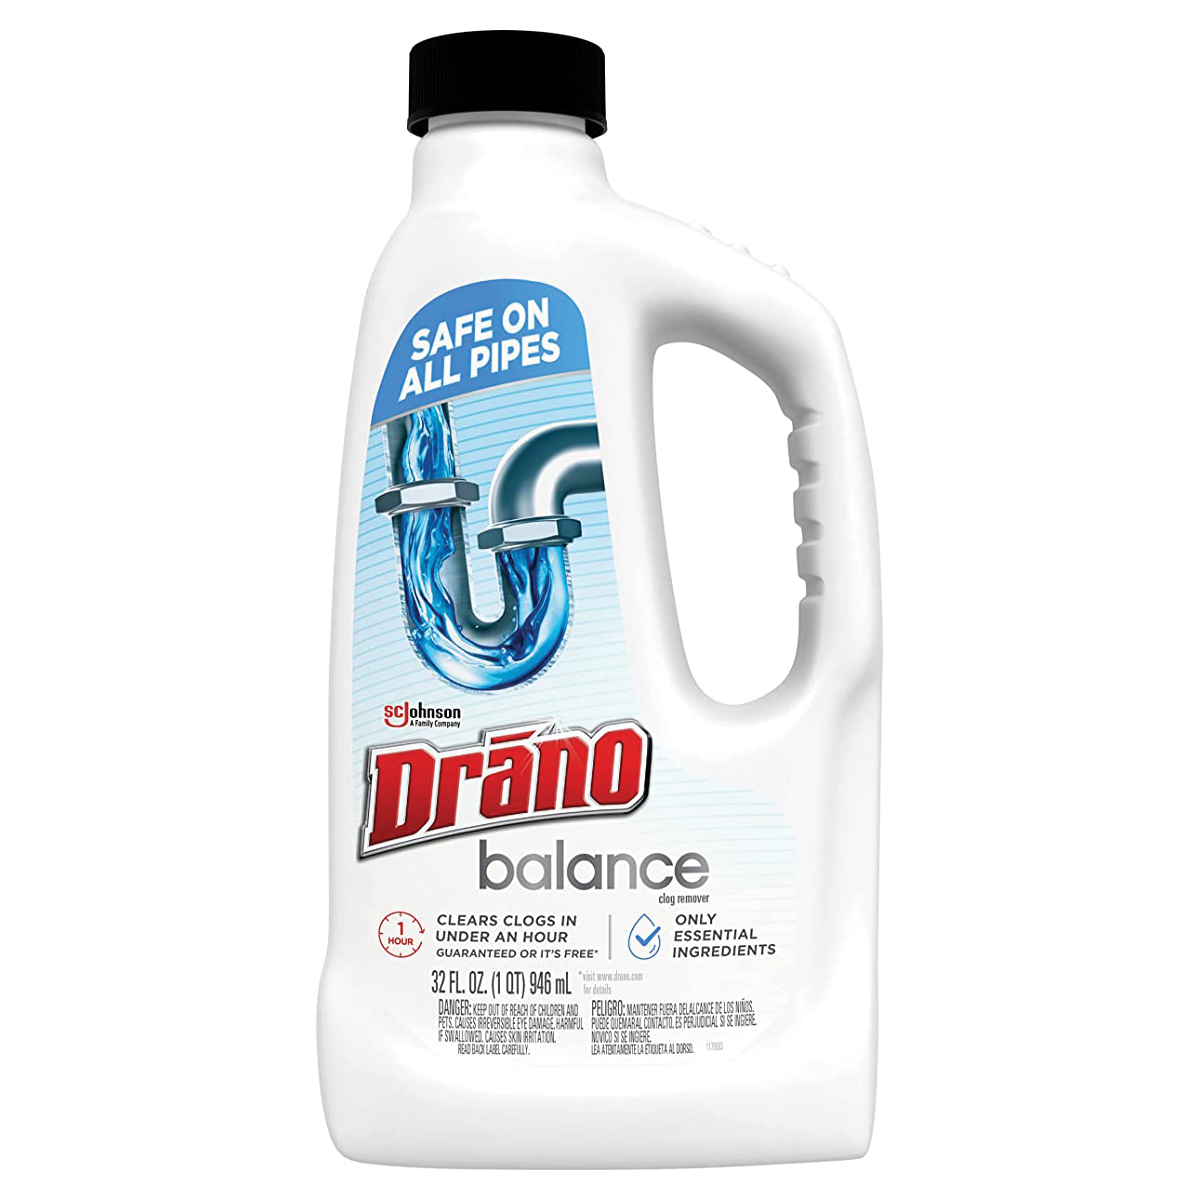 Drano liquid clog remover sjn335712 32oz bottles case of 12 replaces  DVOCB001169 and SJN000116